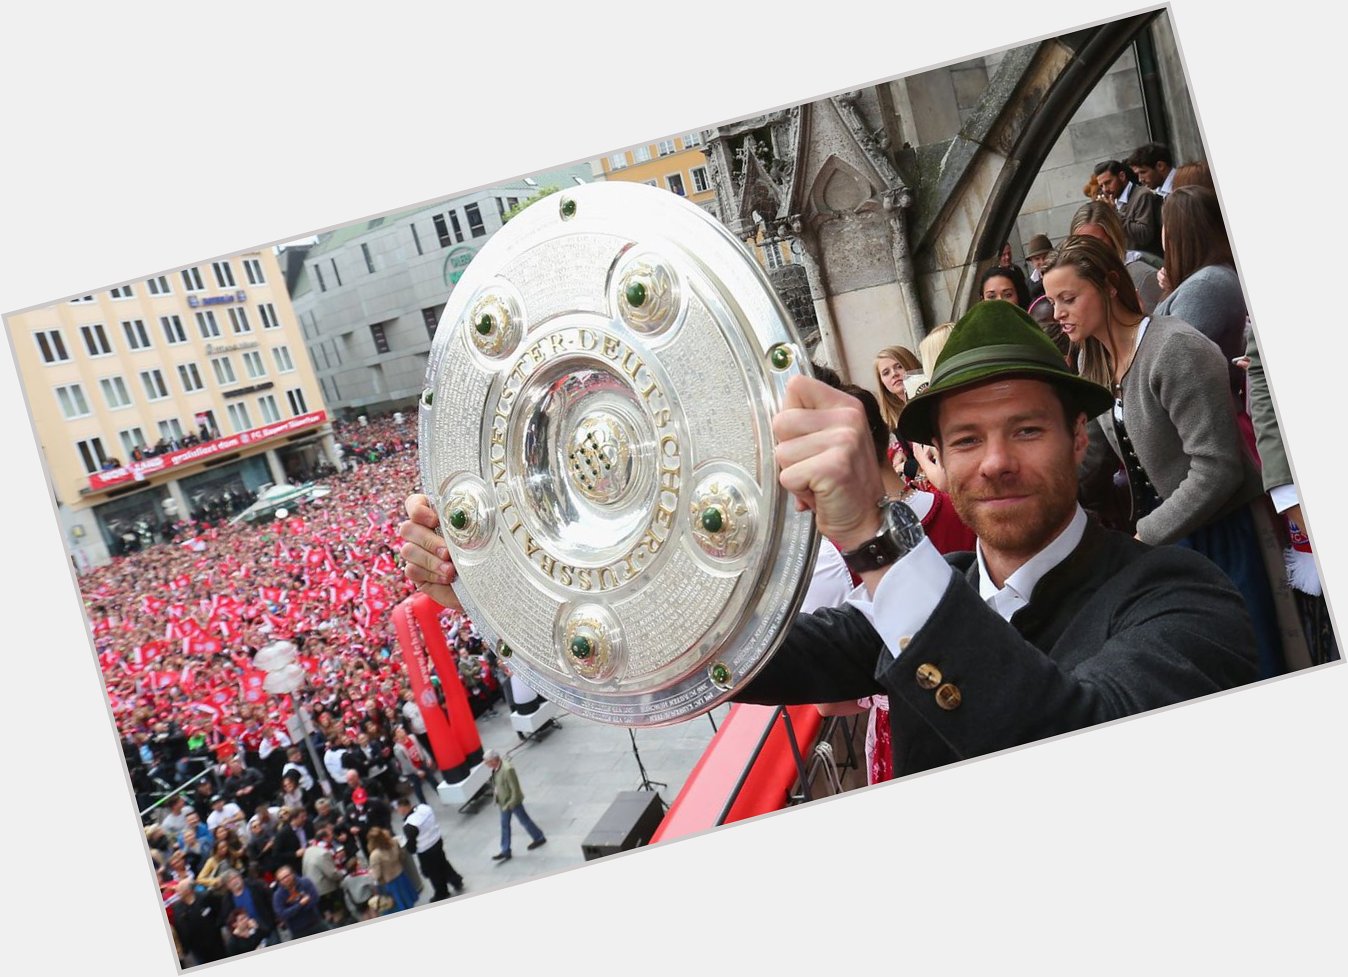 Happy birthday to Bayern Munich midfielder Xabi Alonso.

The former Liverpool player turns 34 today. 